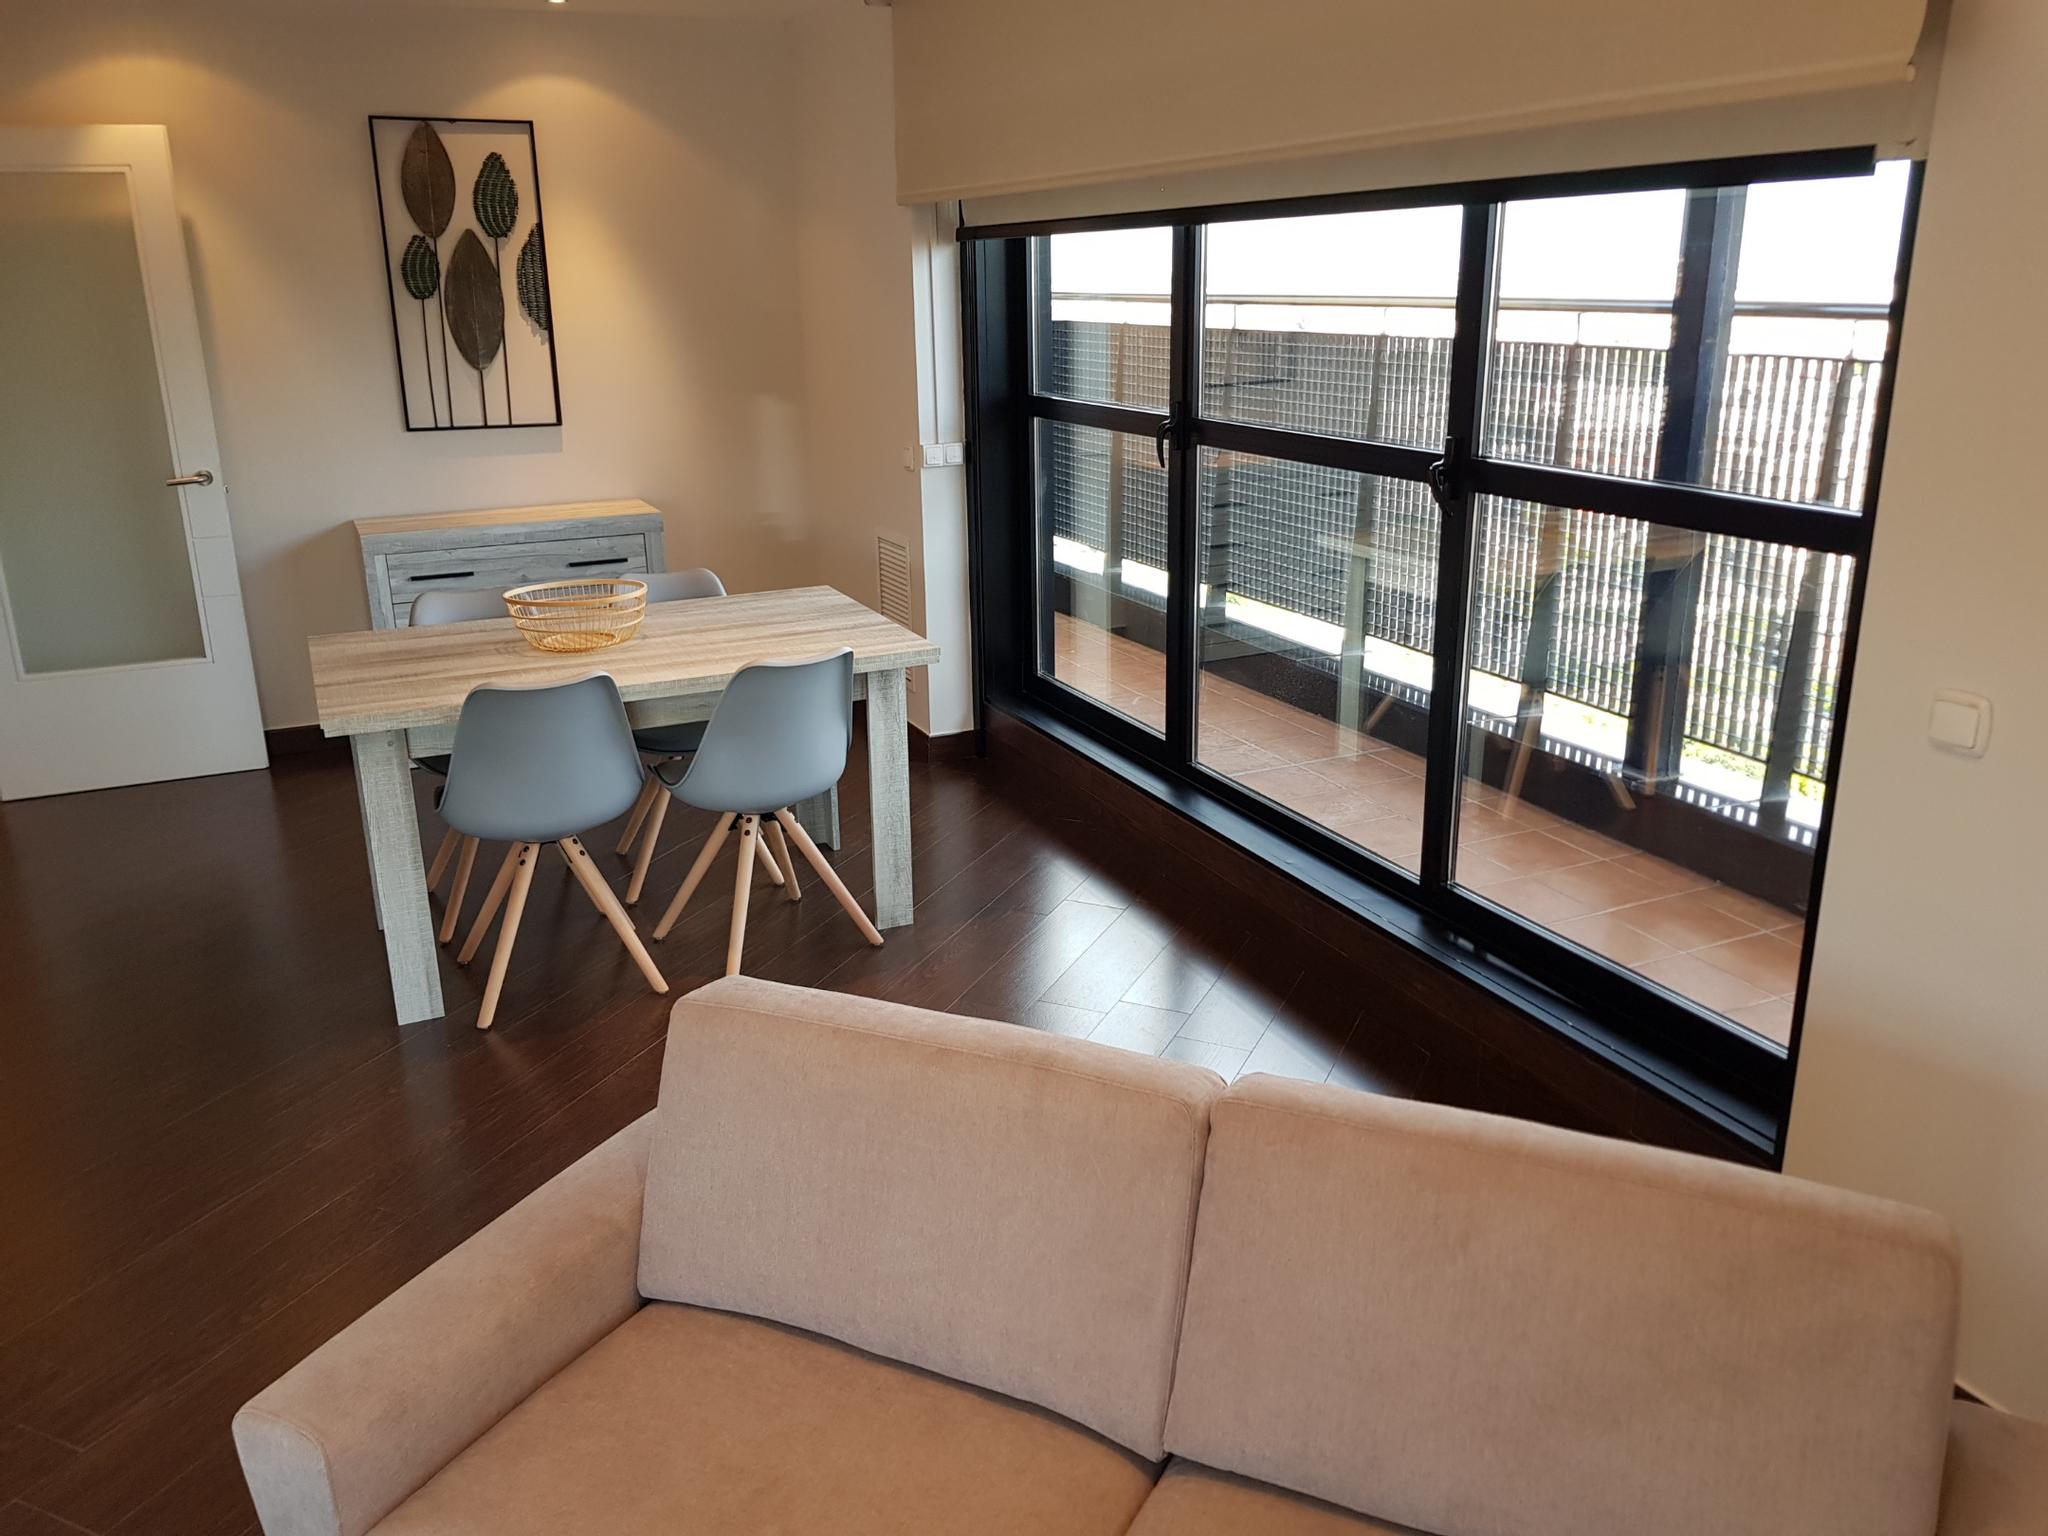 Las Cortes - Exclusive expat apartment in Valencia